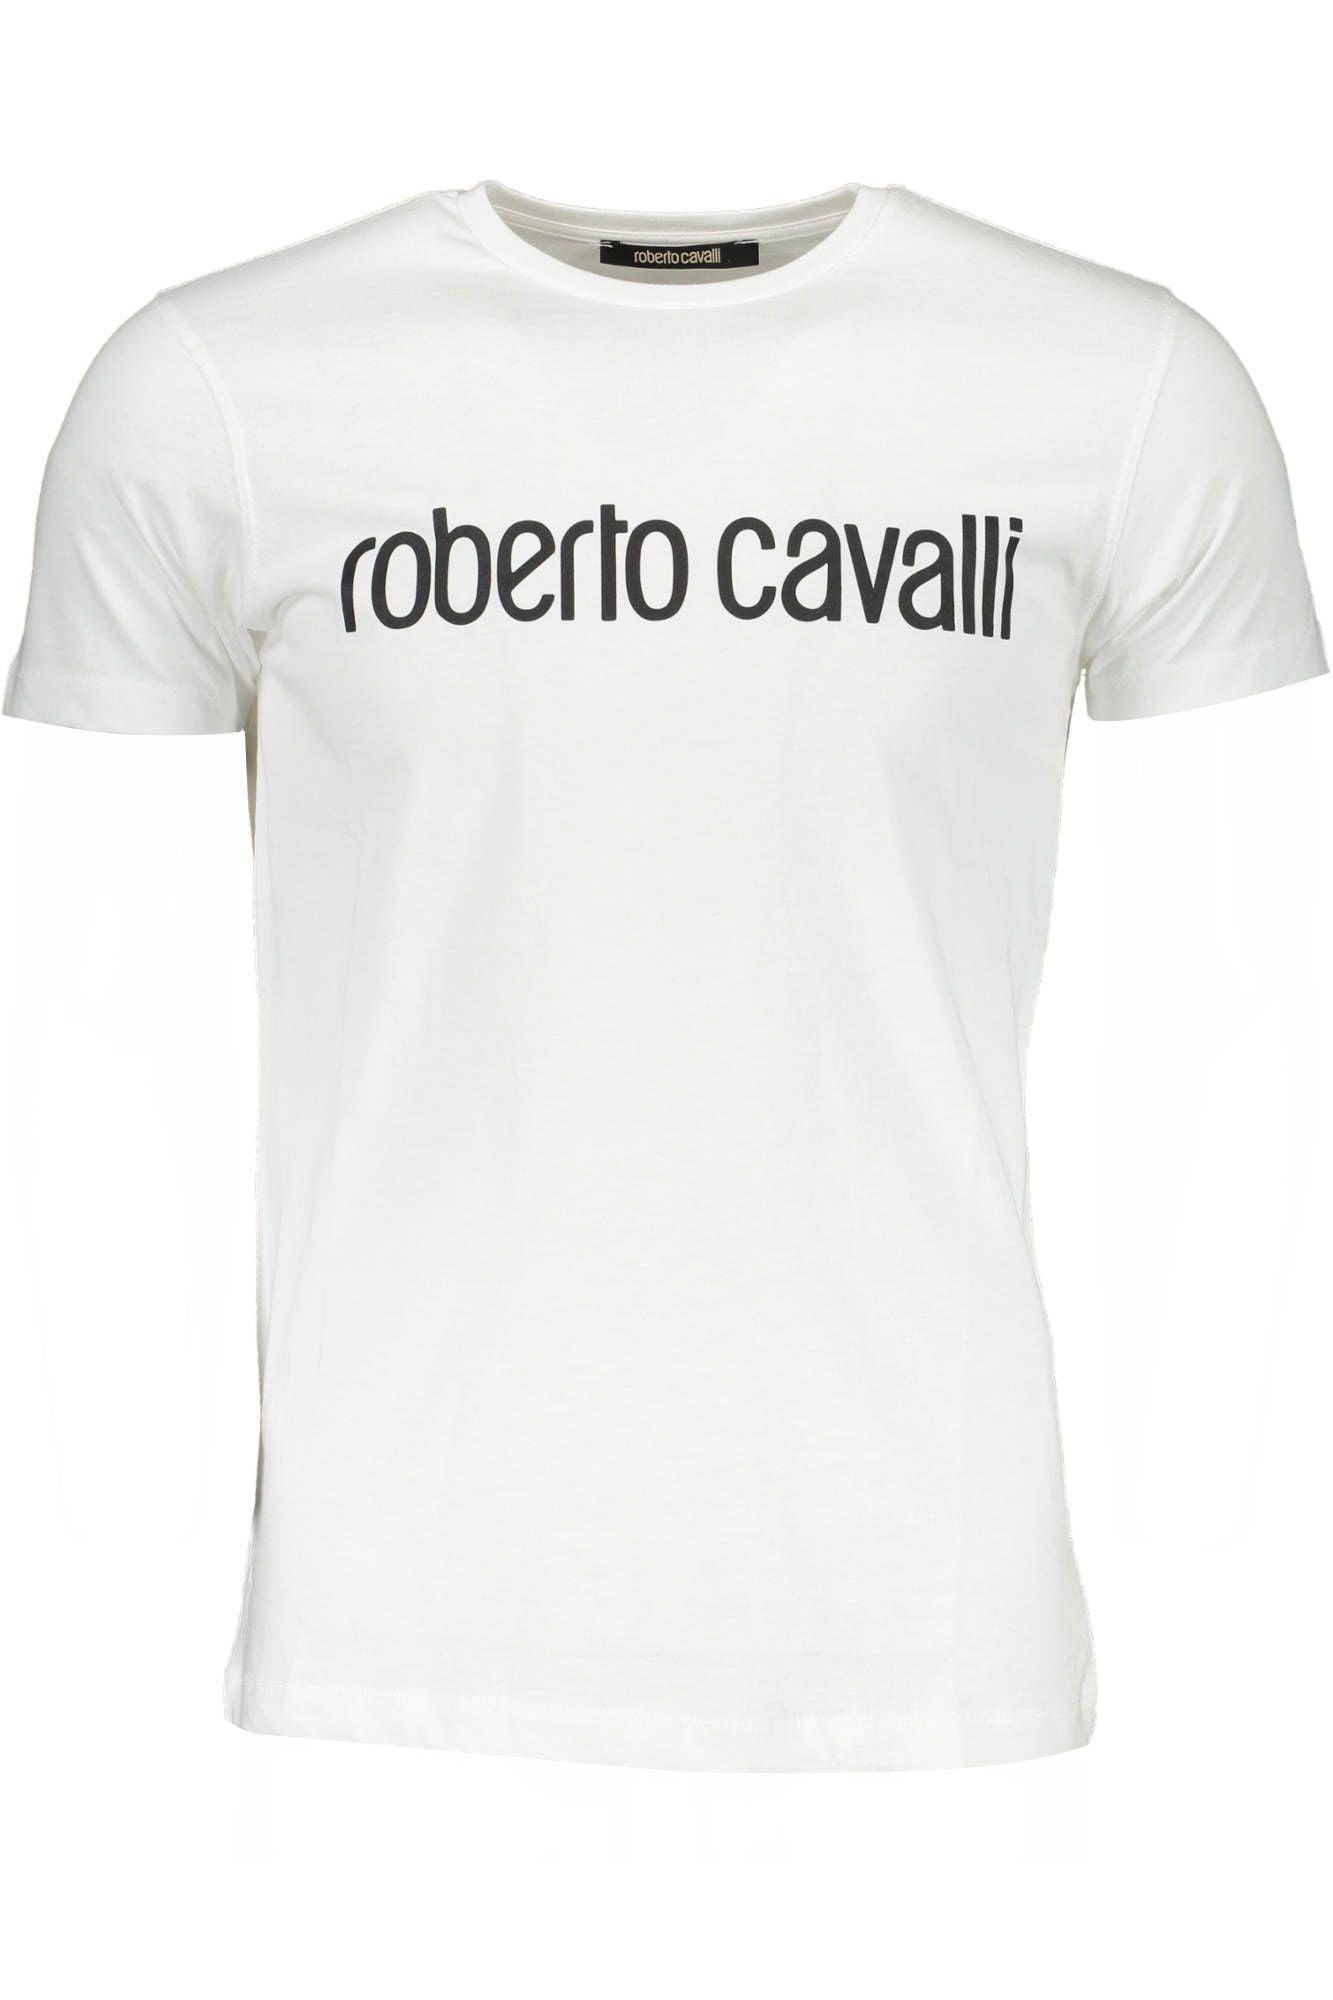 Roberto Cavalli Cotton T-shirt in Black for Men | Lyst